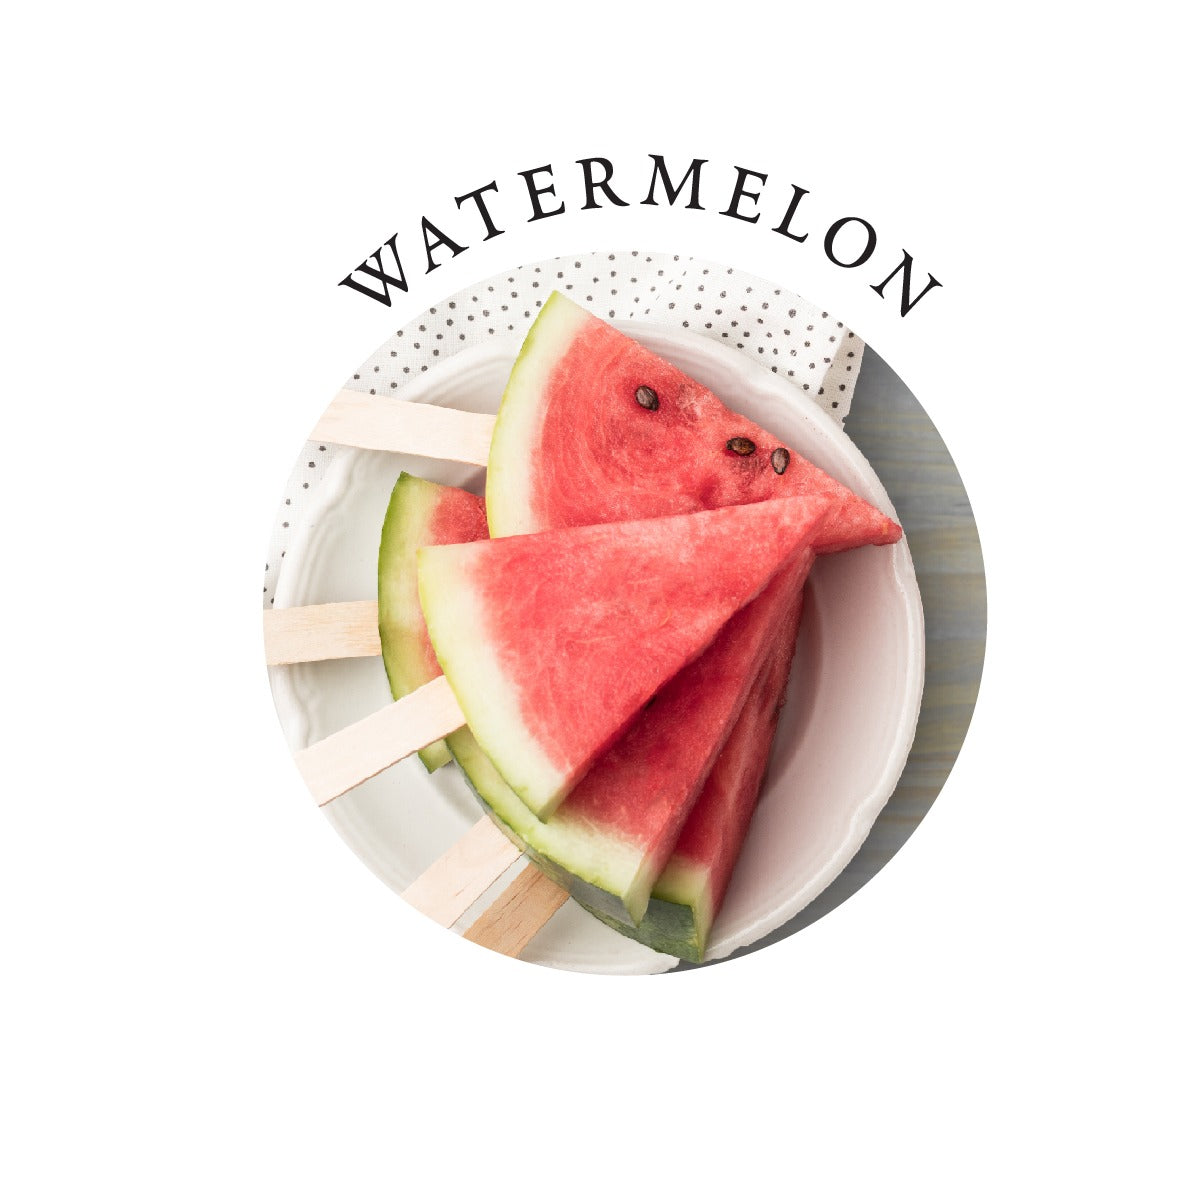 Earthly Body Edible Massage Lotion - Watermelon, 8oz/237ml